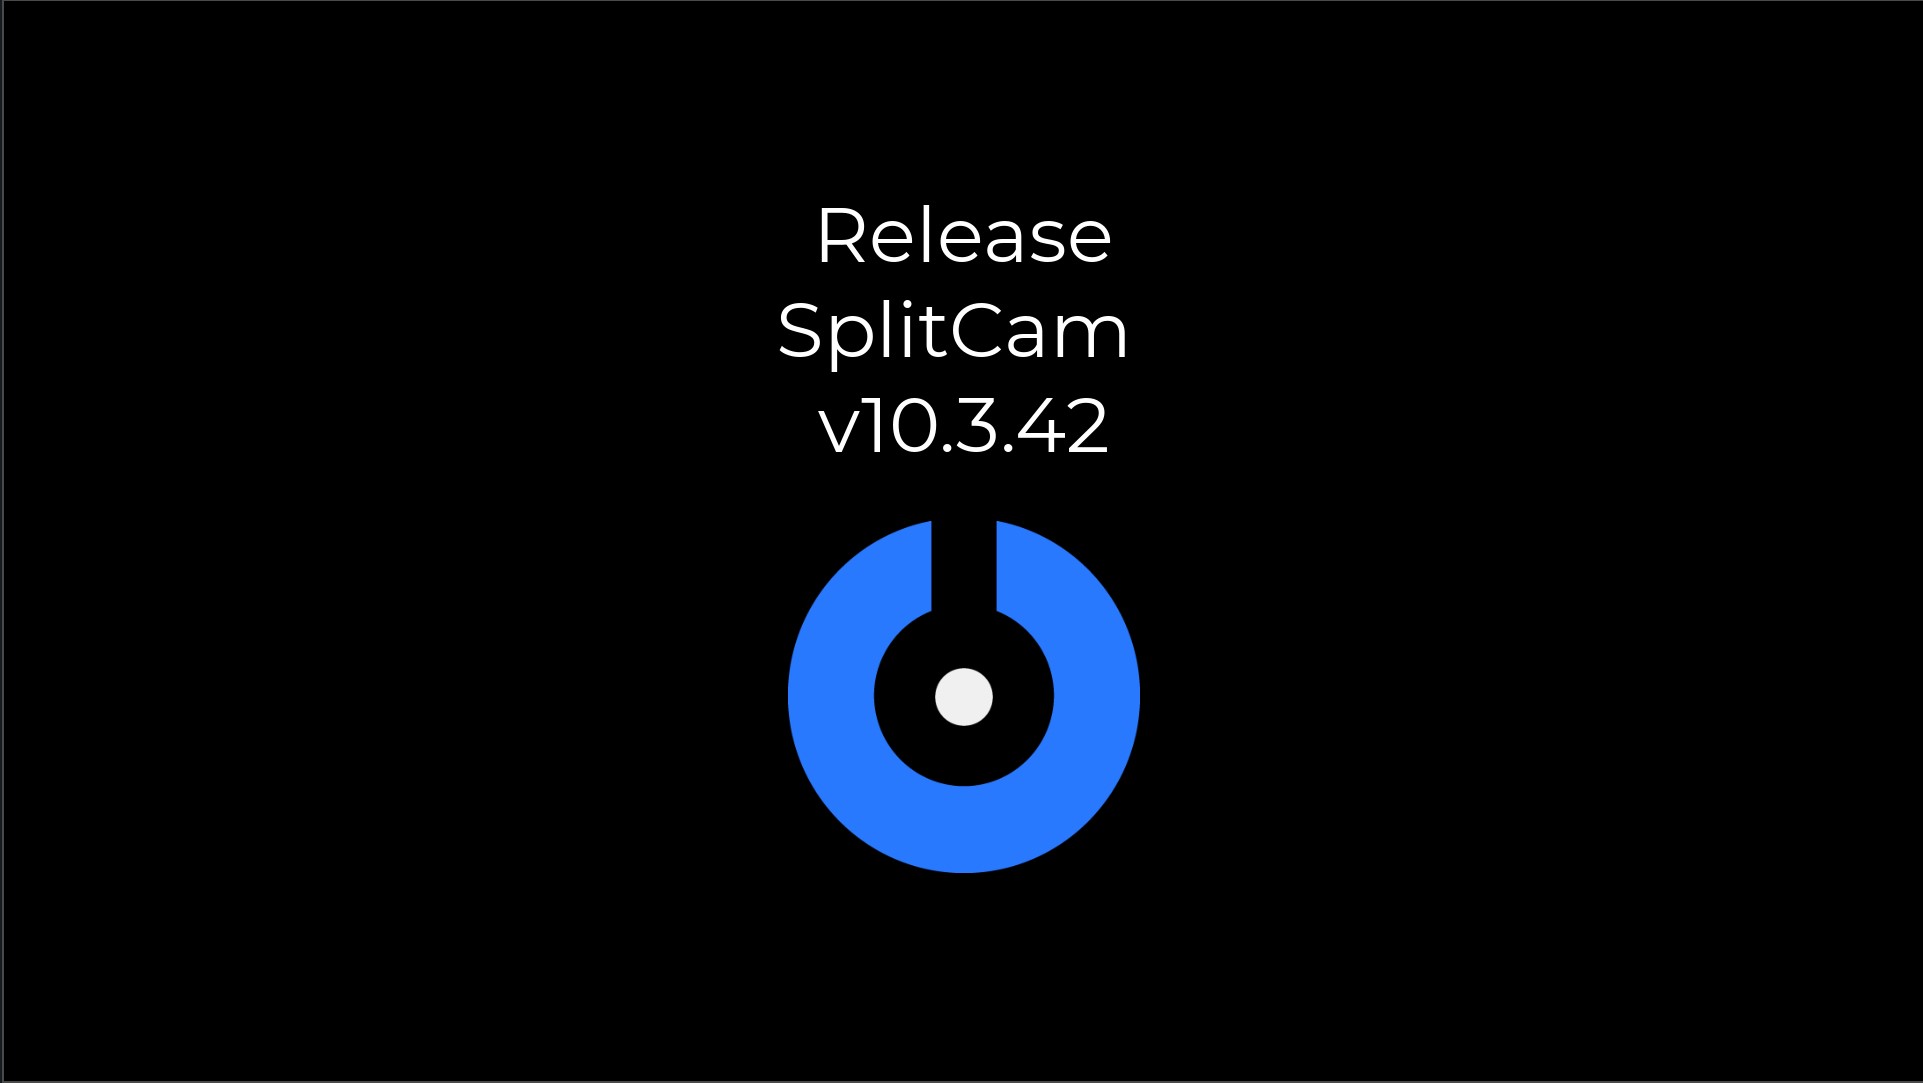 download the last version for ios SplitCam 10.7.7